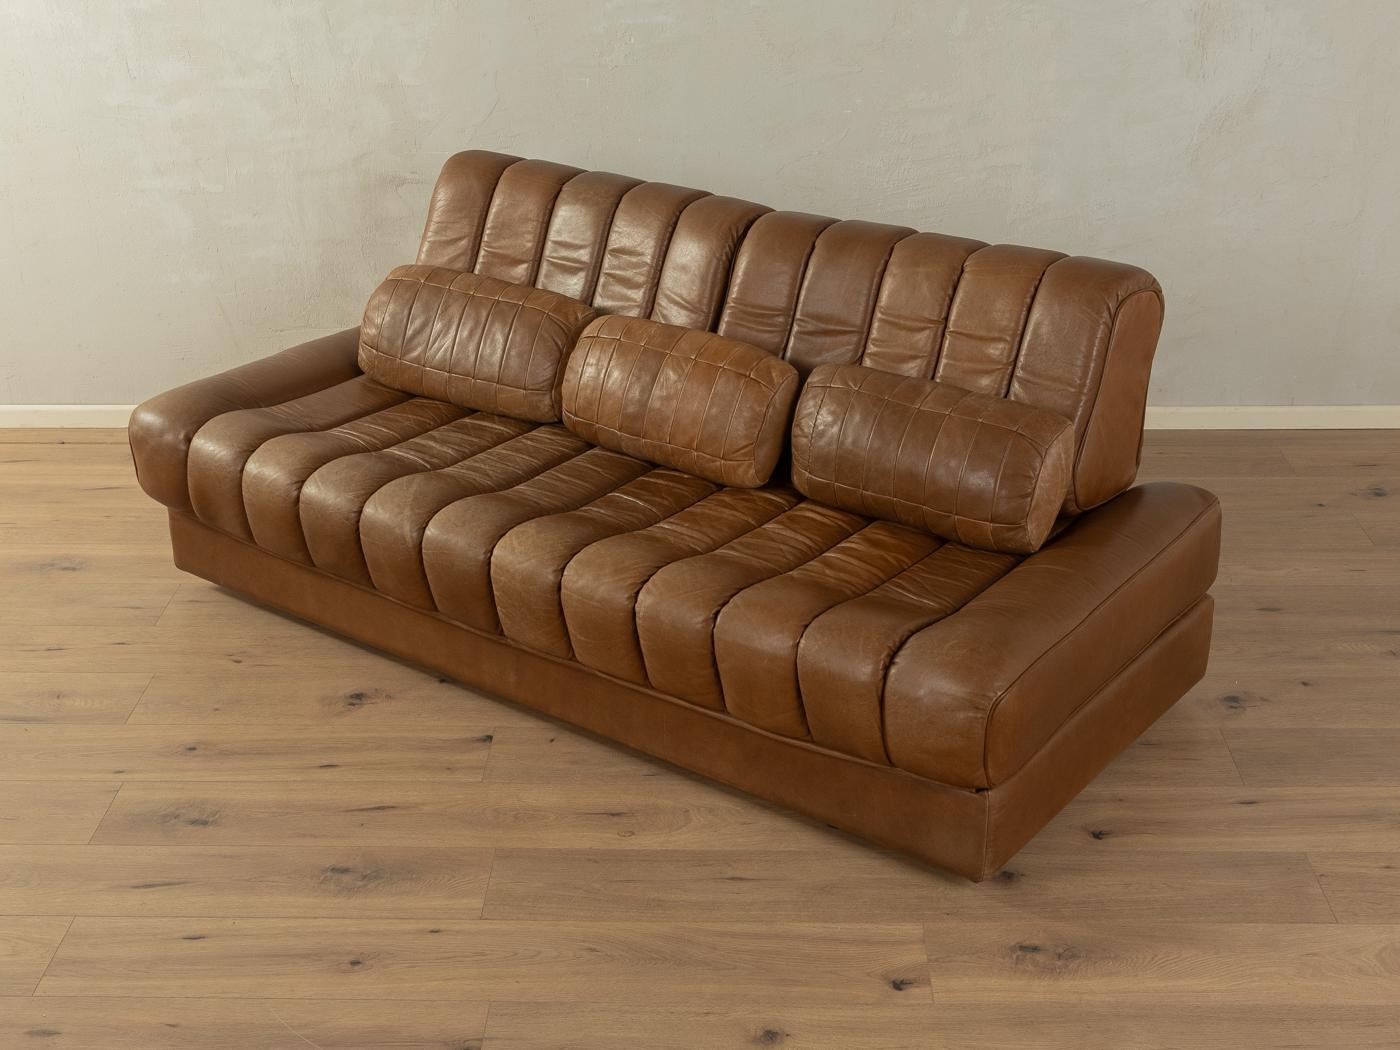 Leather  Convertible sofa, de Sede, DS-85  For Sale